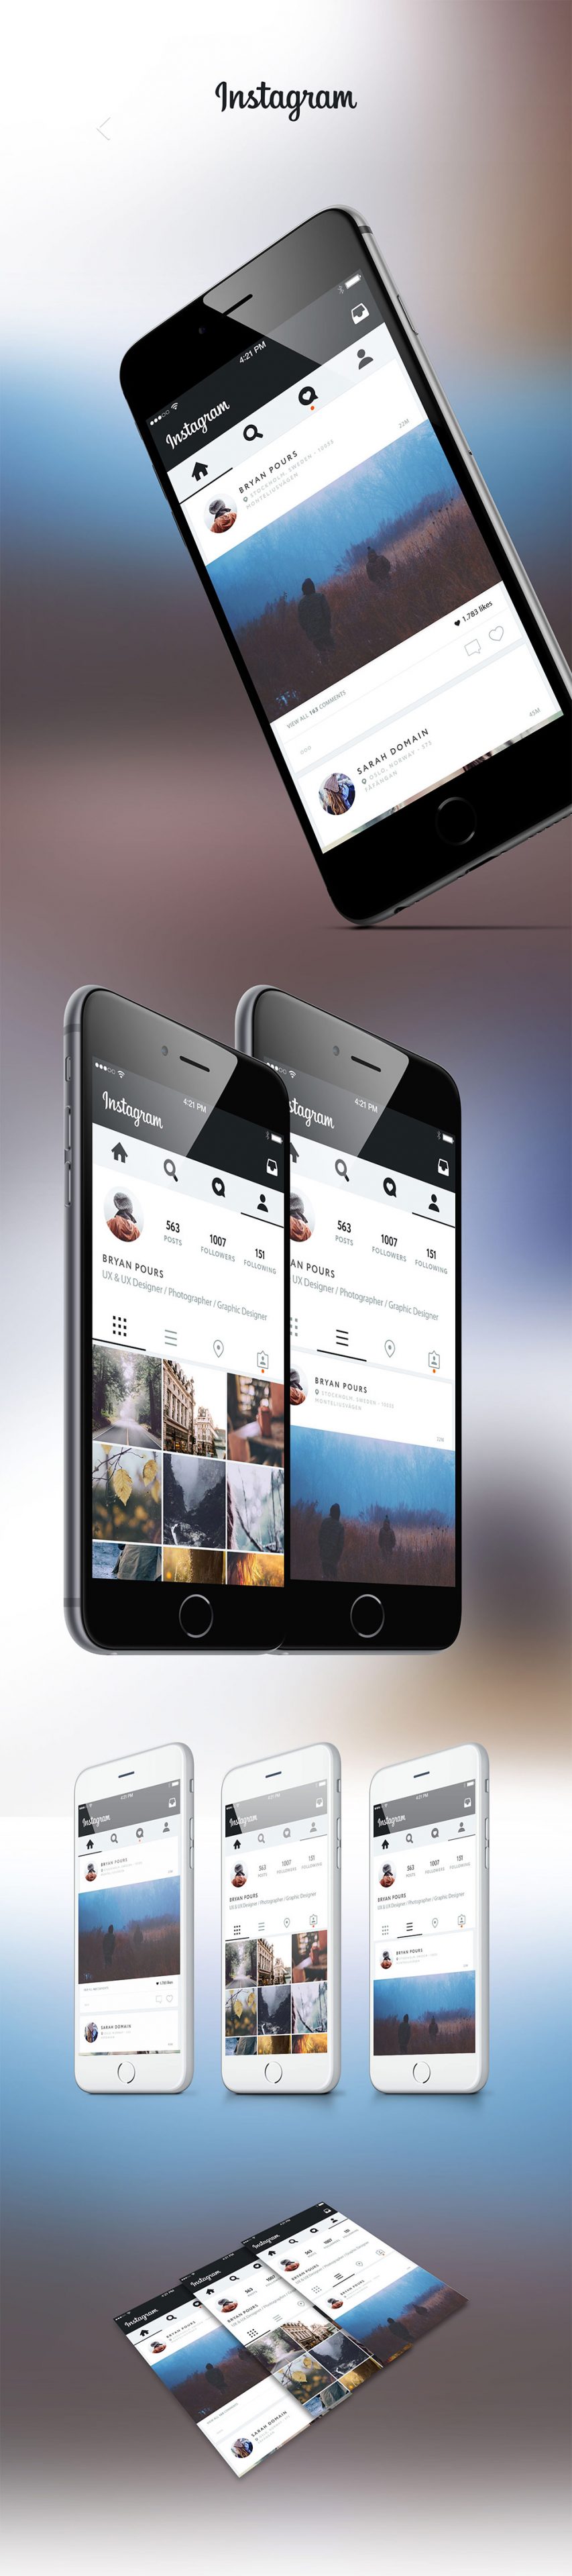 Instagram Application UI Revamp Concept Free 